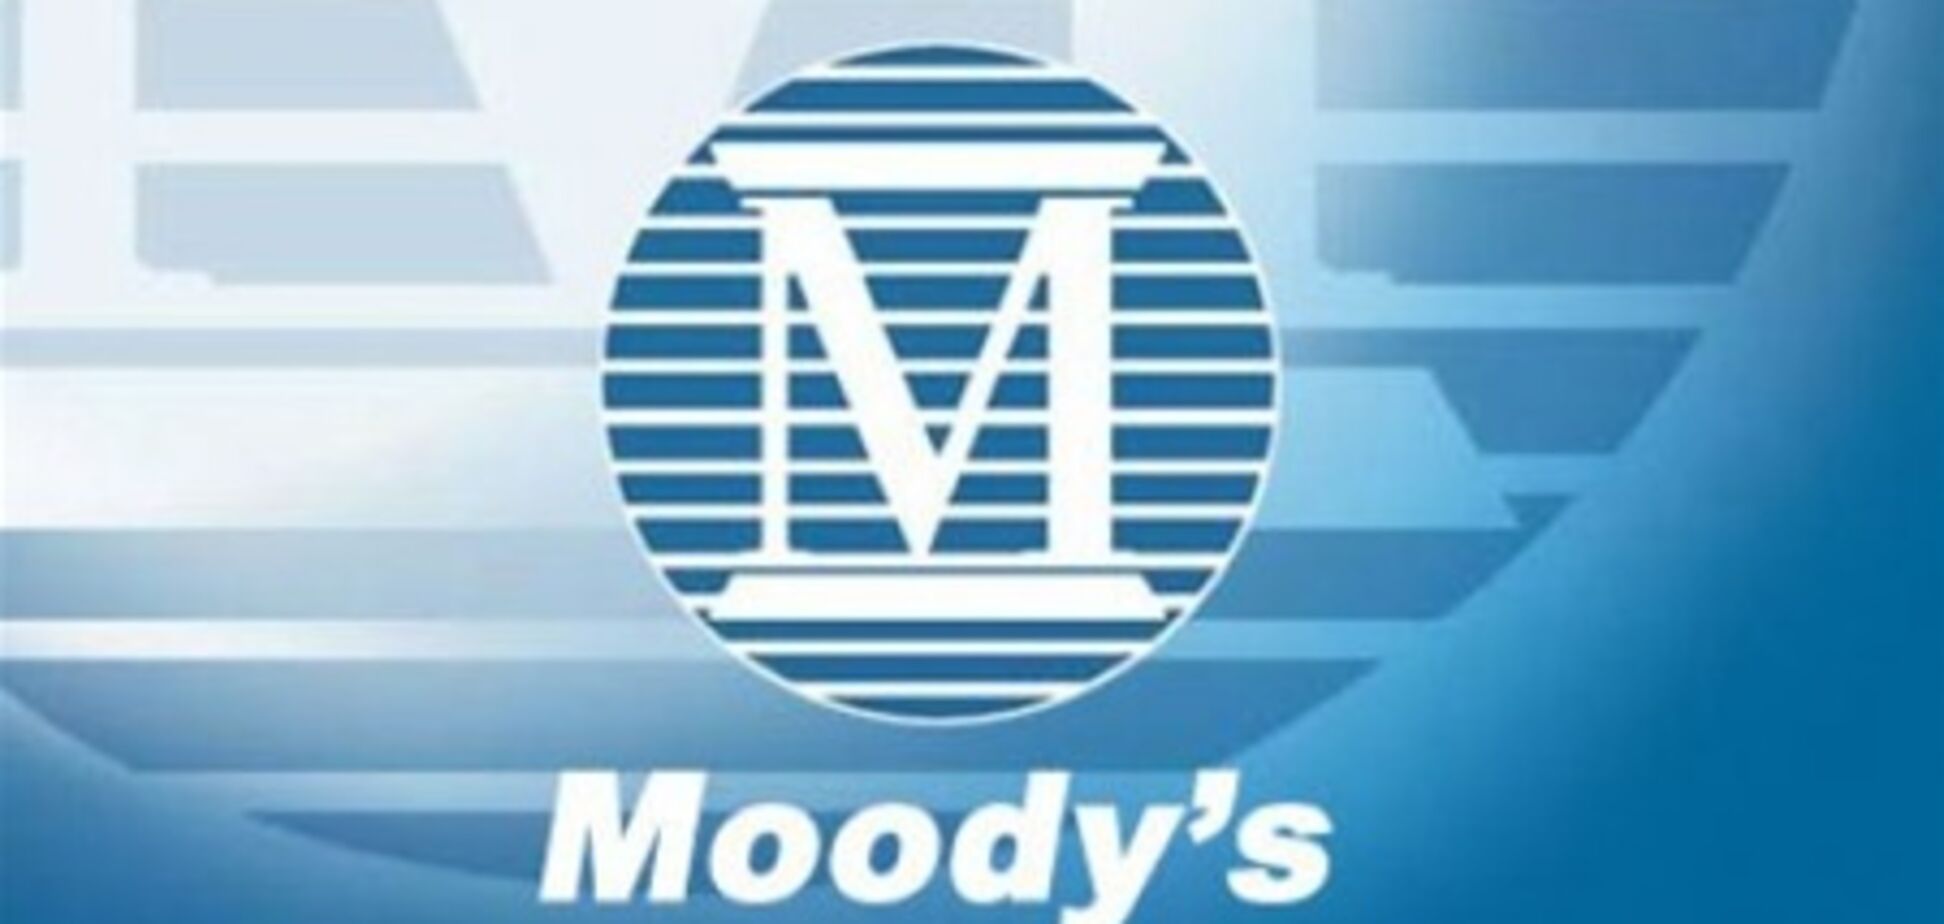 Украине угрожает дефолт - Moody’s